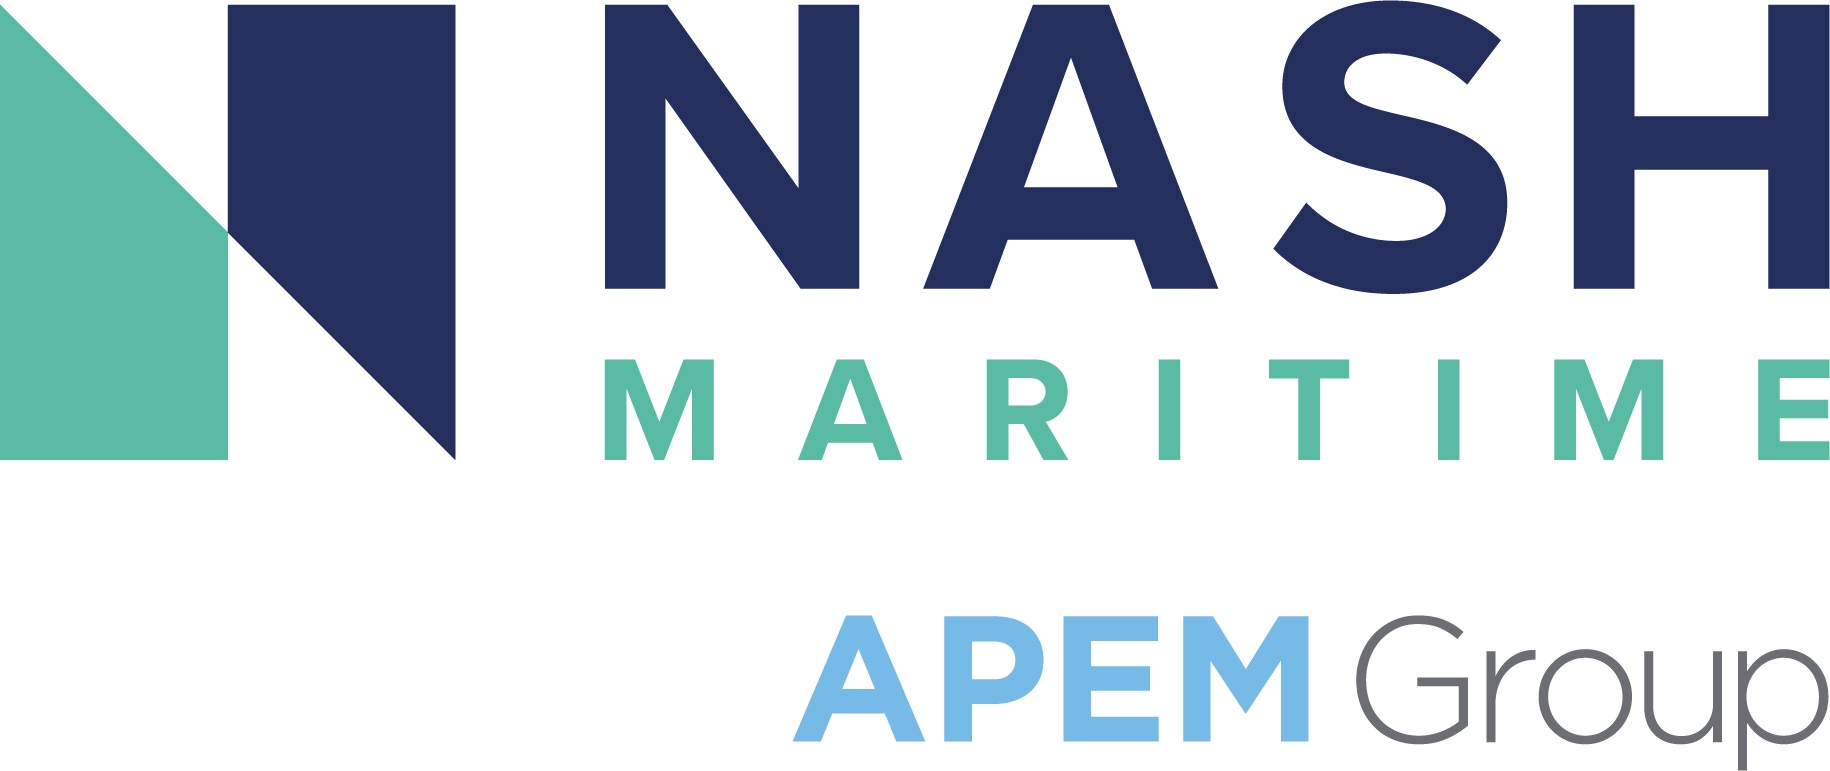 Nash apem group logo col